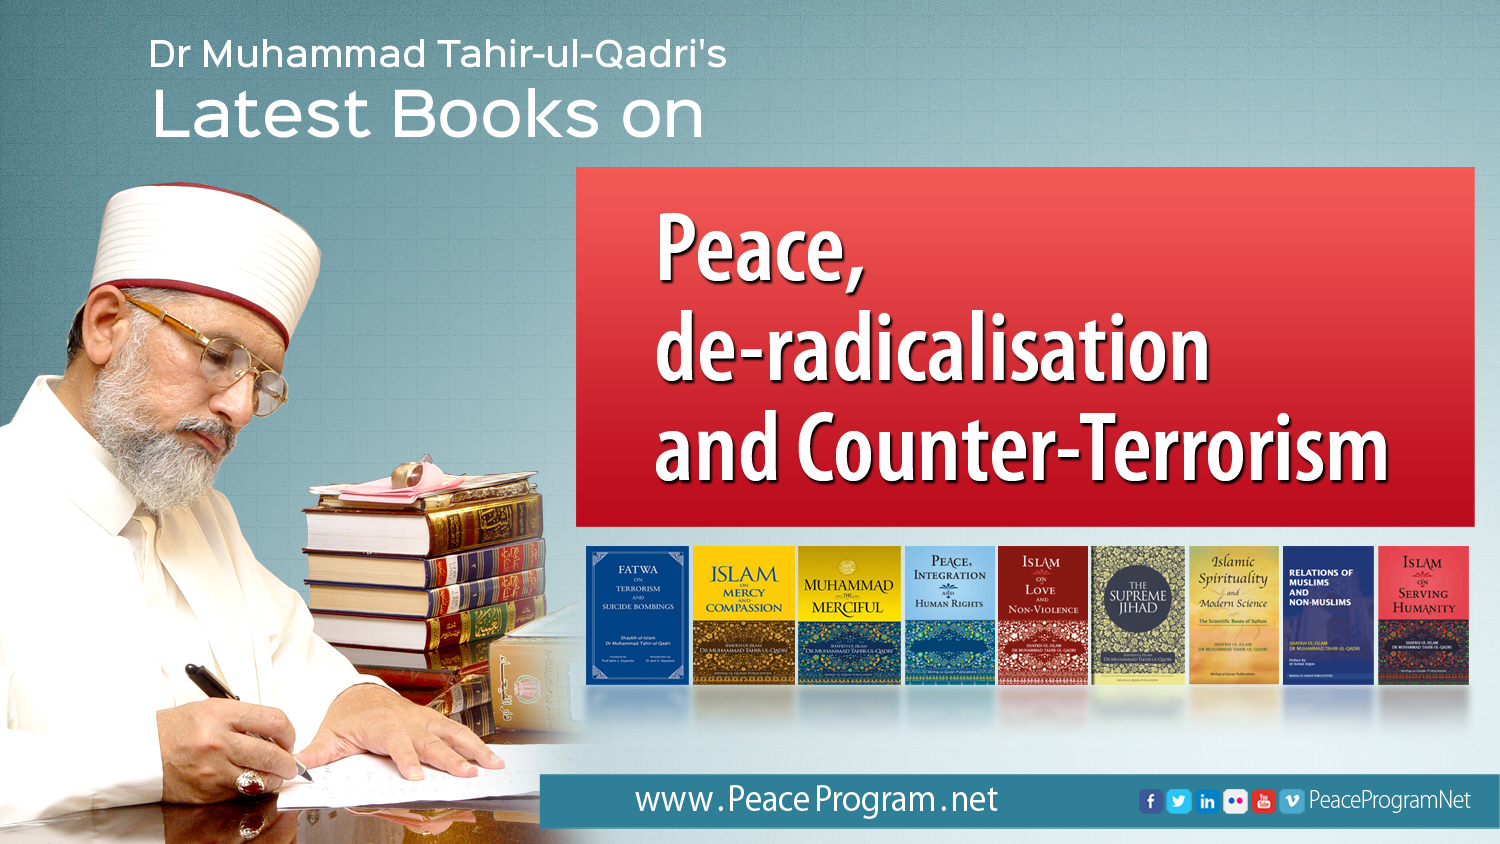 DR MUHAMMAD TAHIR-UL-QADRI'S LATEST BOOKS ON PEACE, DE-RADICALISATION AND COUNTER-TERRORISM